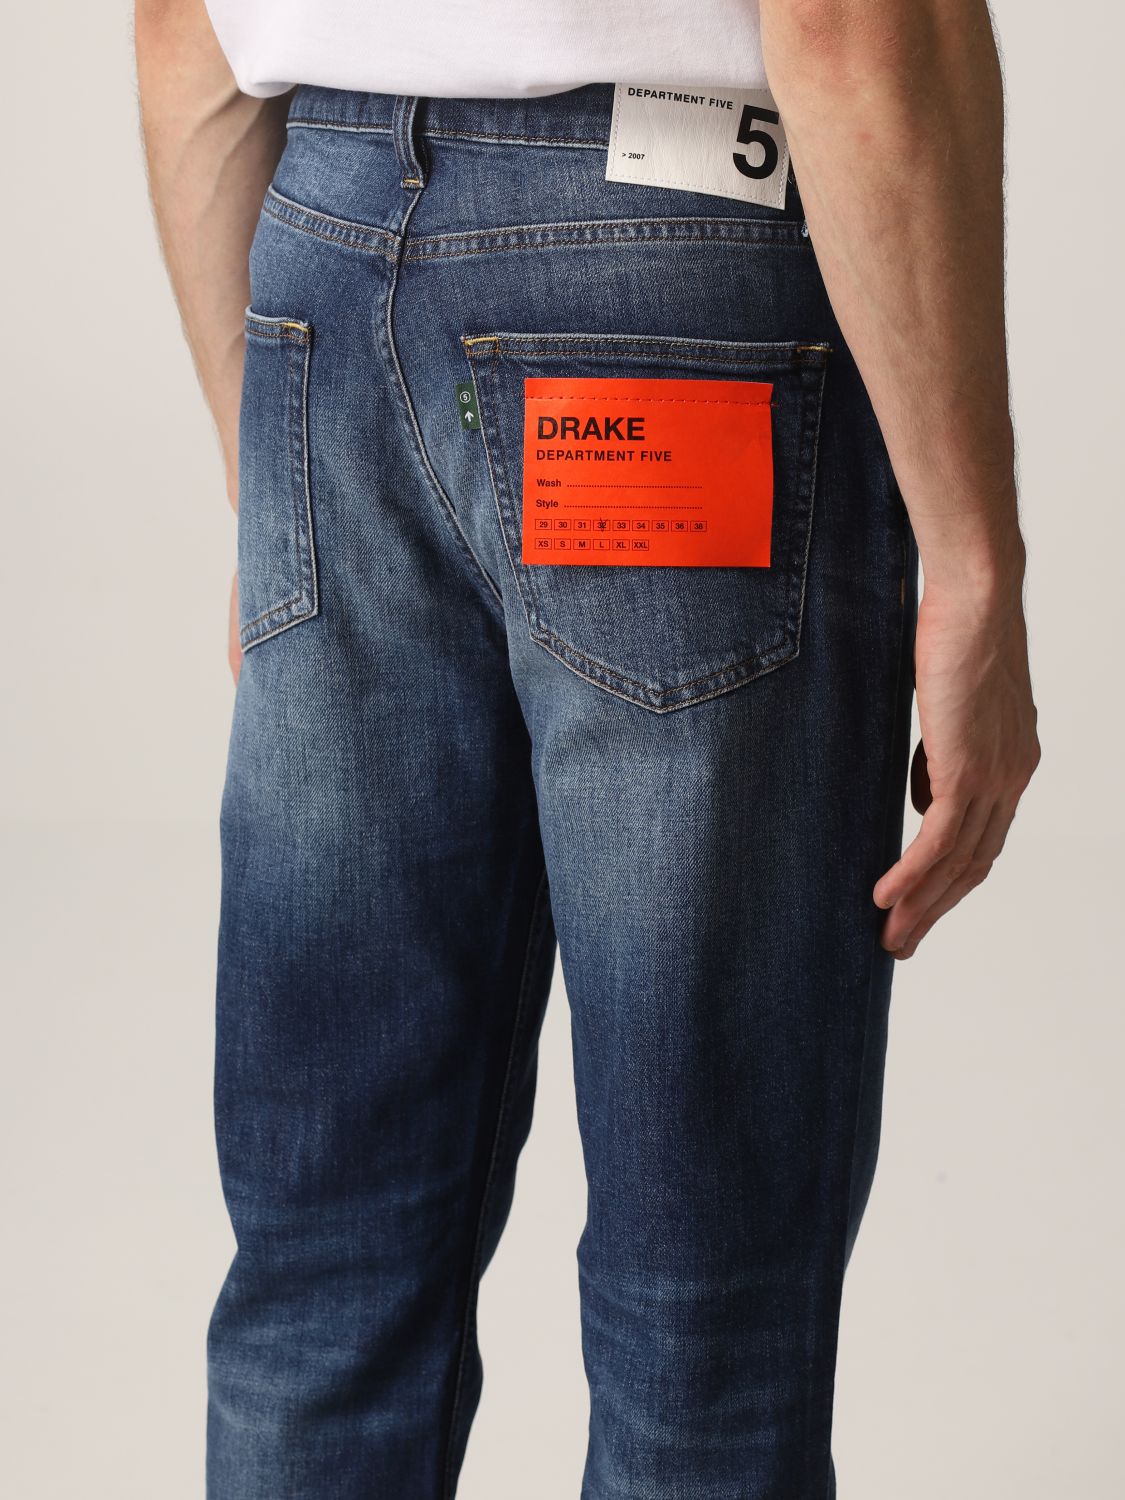 DEPARTMENT 5: Jeans men Department Five - Denim | Jeans Department 